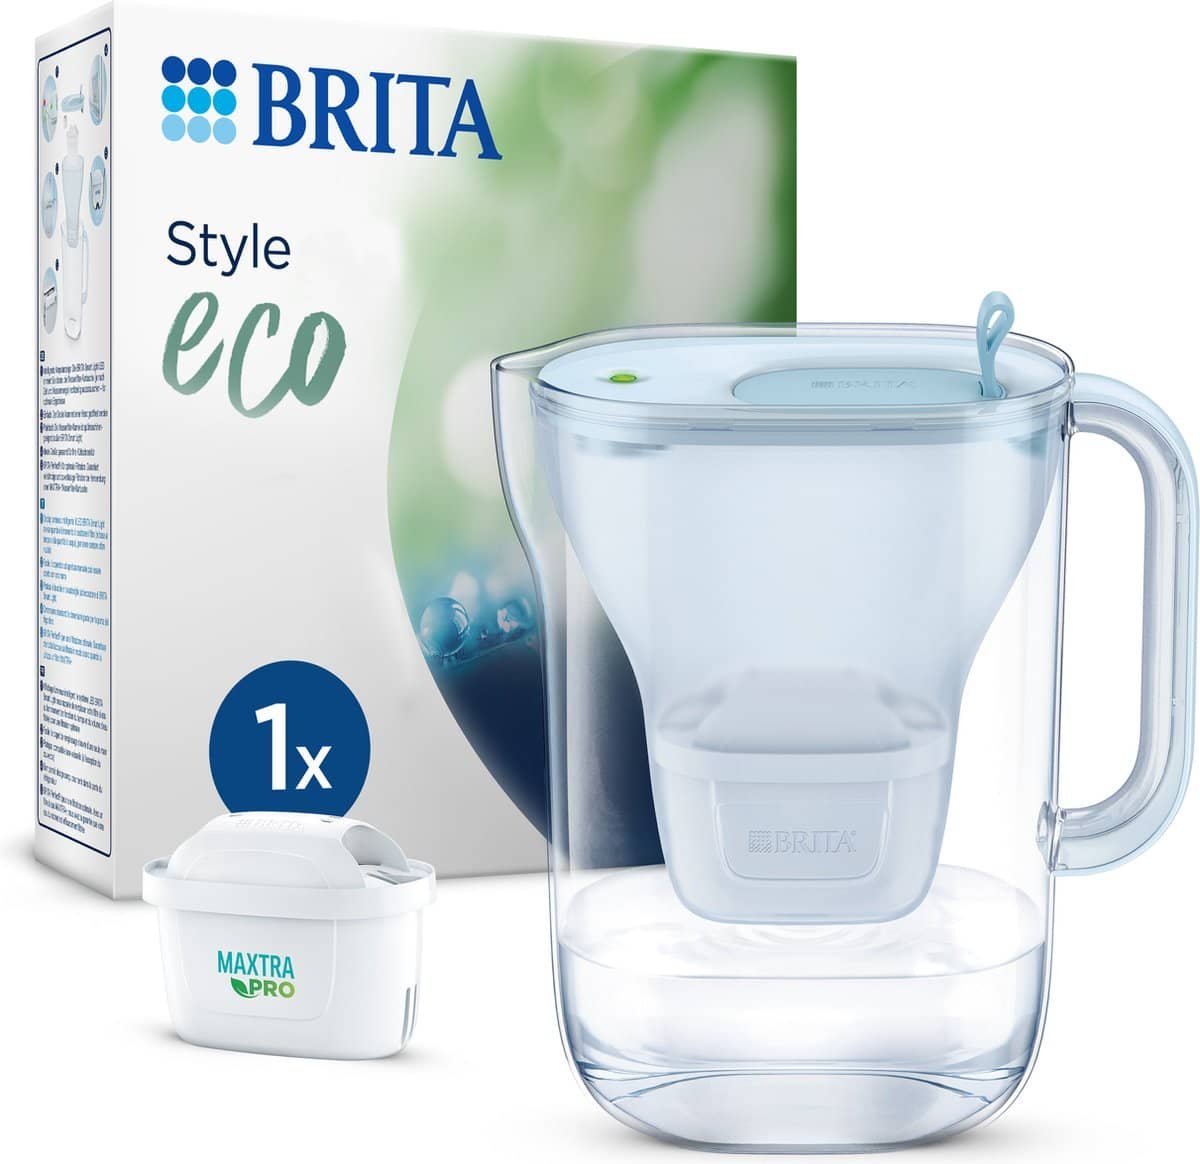 BRITA Style eco + MAXTRA PRO All-in-1 desde 34,99 €